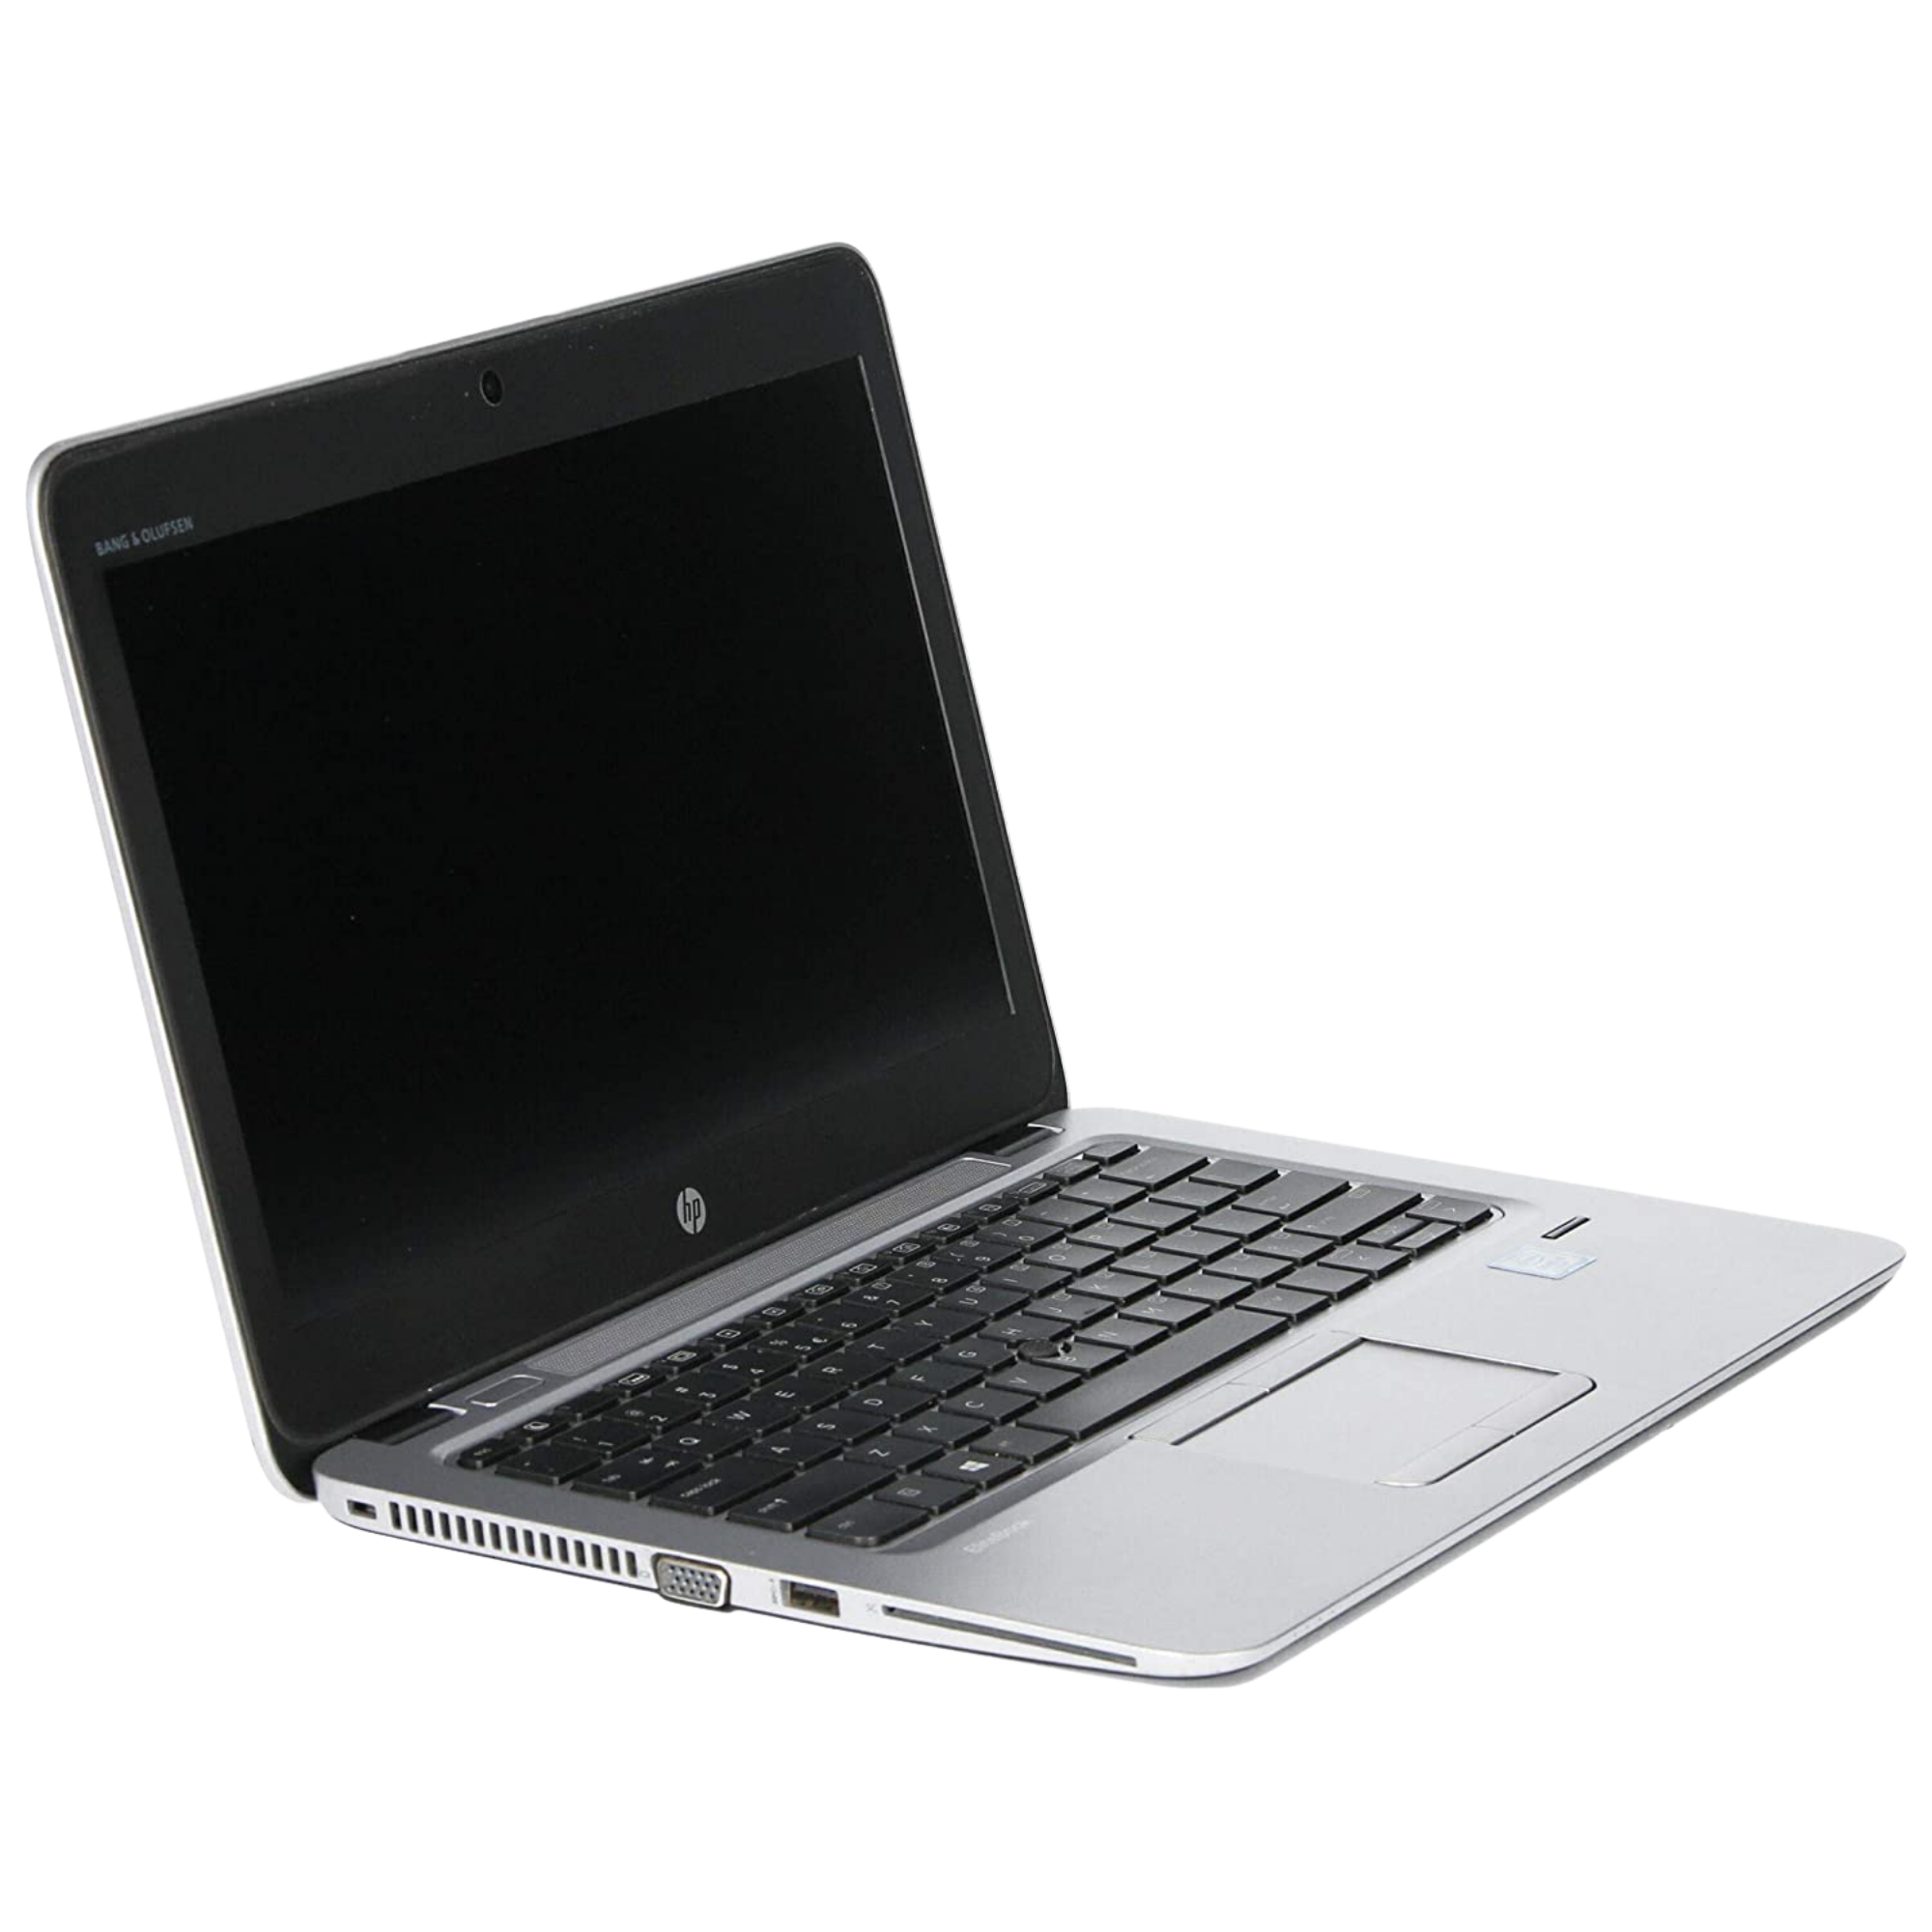 HP Elitebook 820 G3 Intel 6th Gen Core i5 2.6GHz (Certified Refurbished PC)  - Boost Junkies